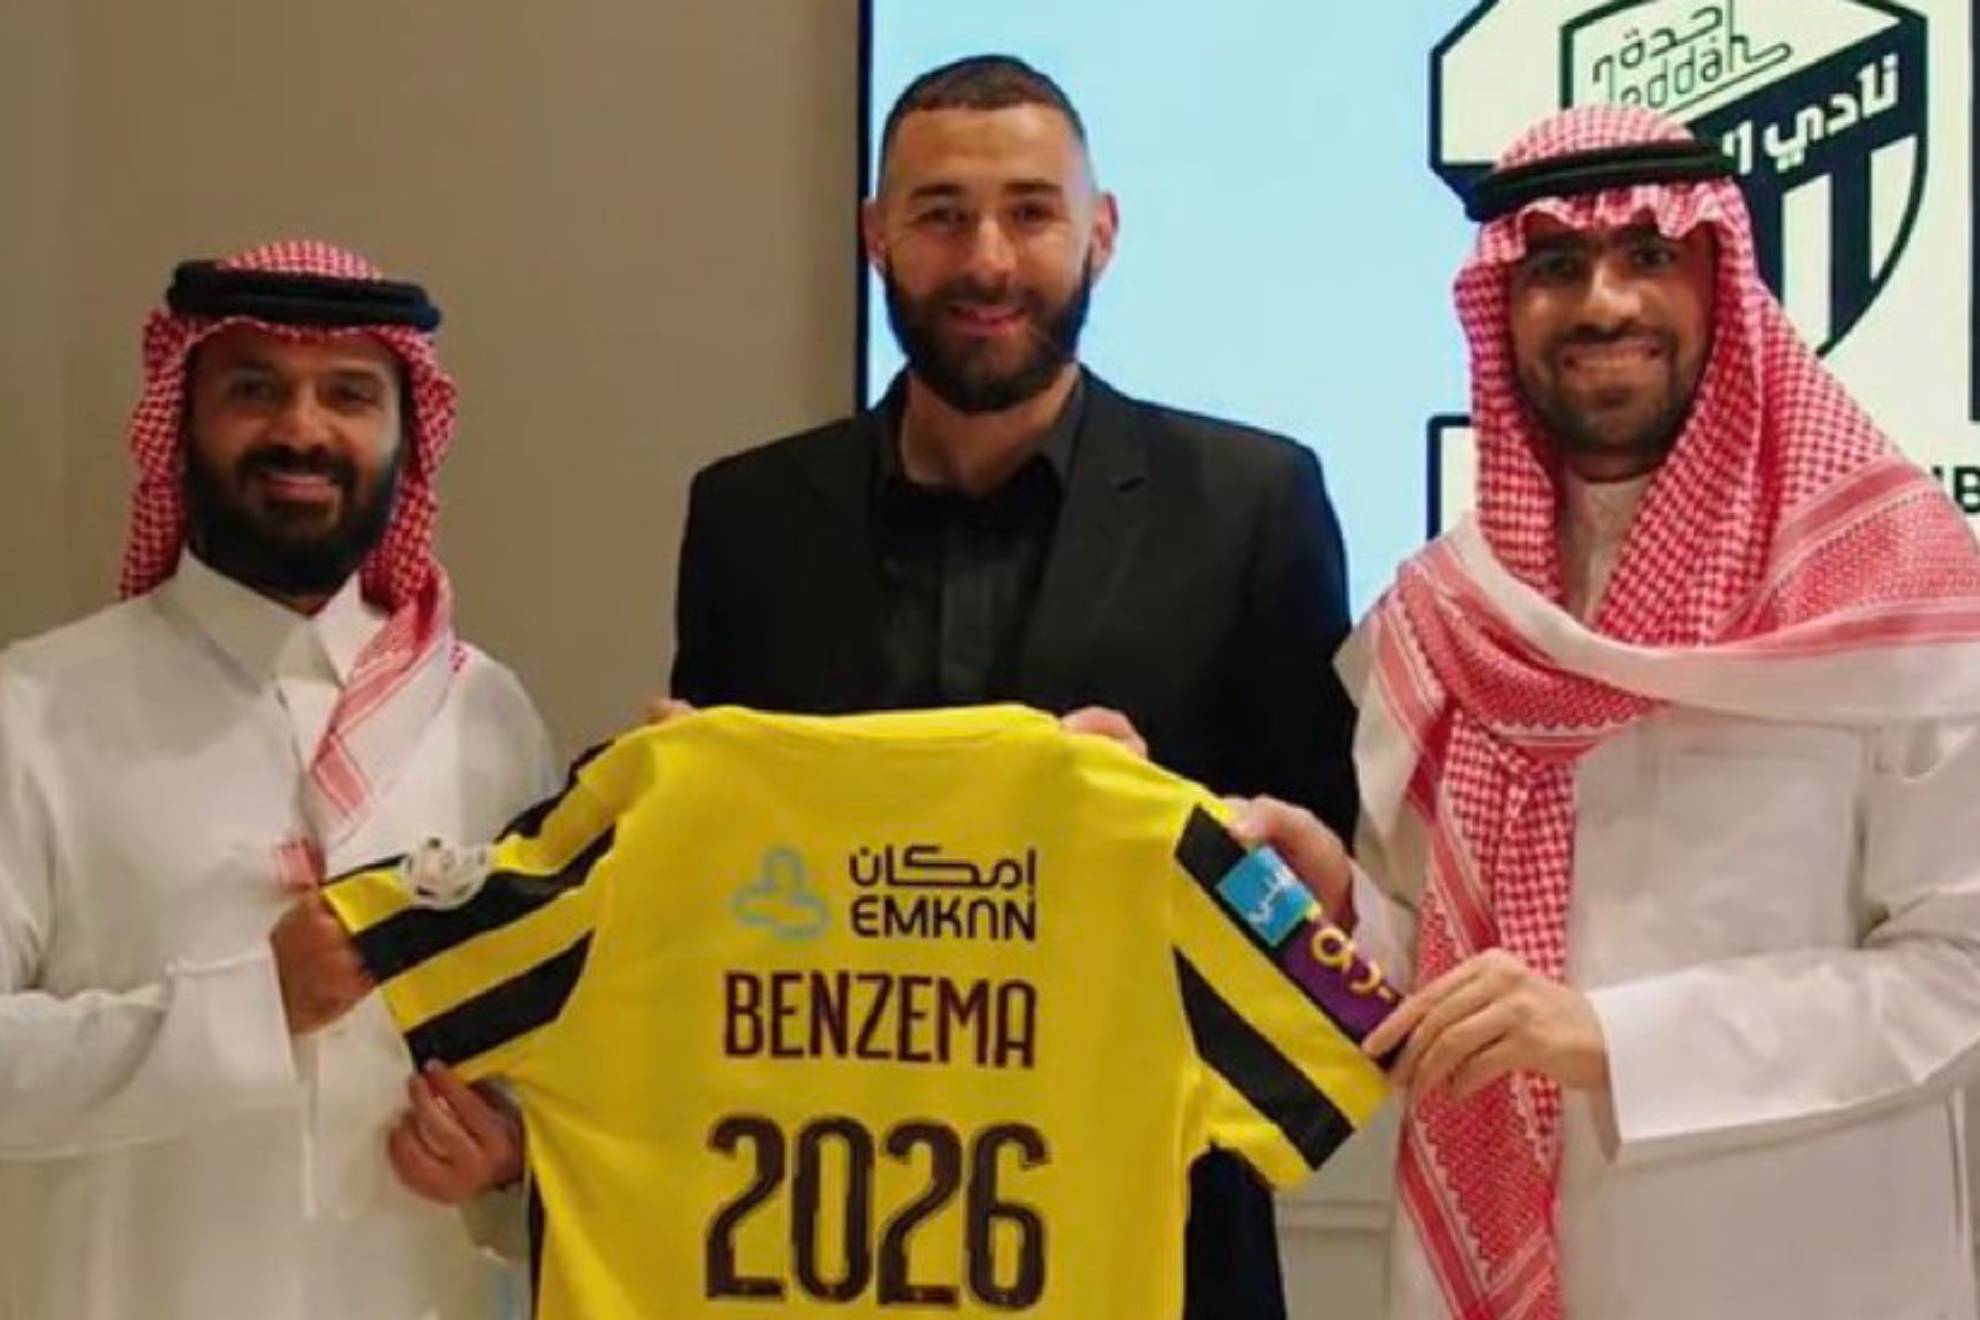 Karim Benzema contract, salary in Saudi Arabia: How do wages